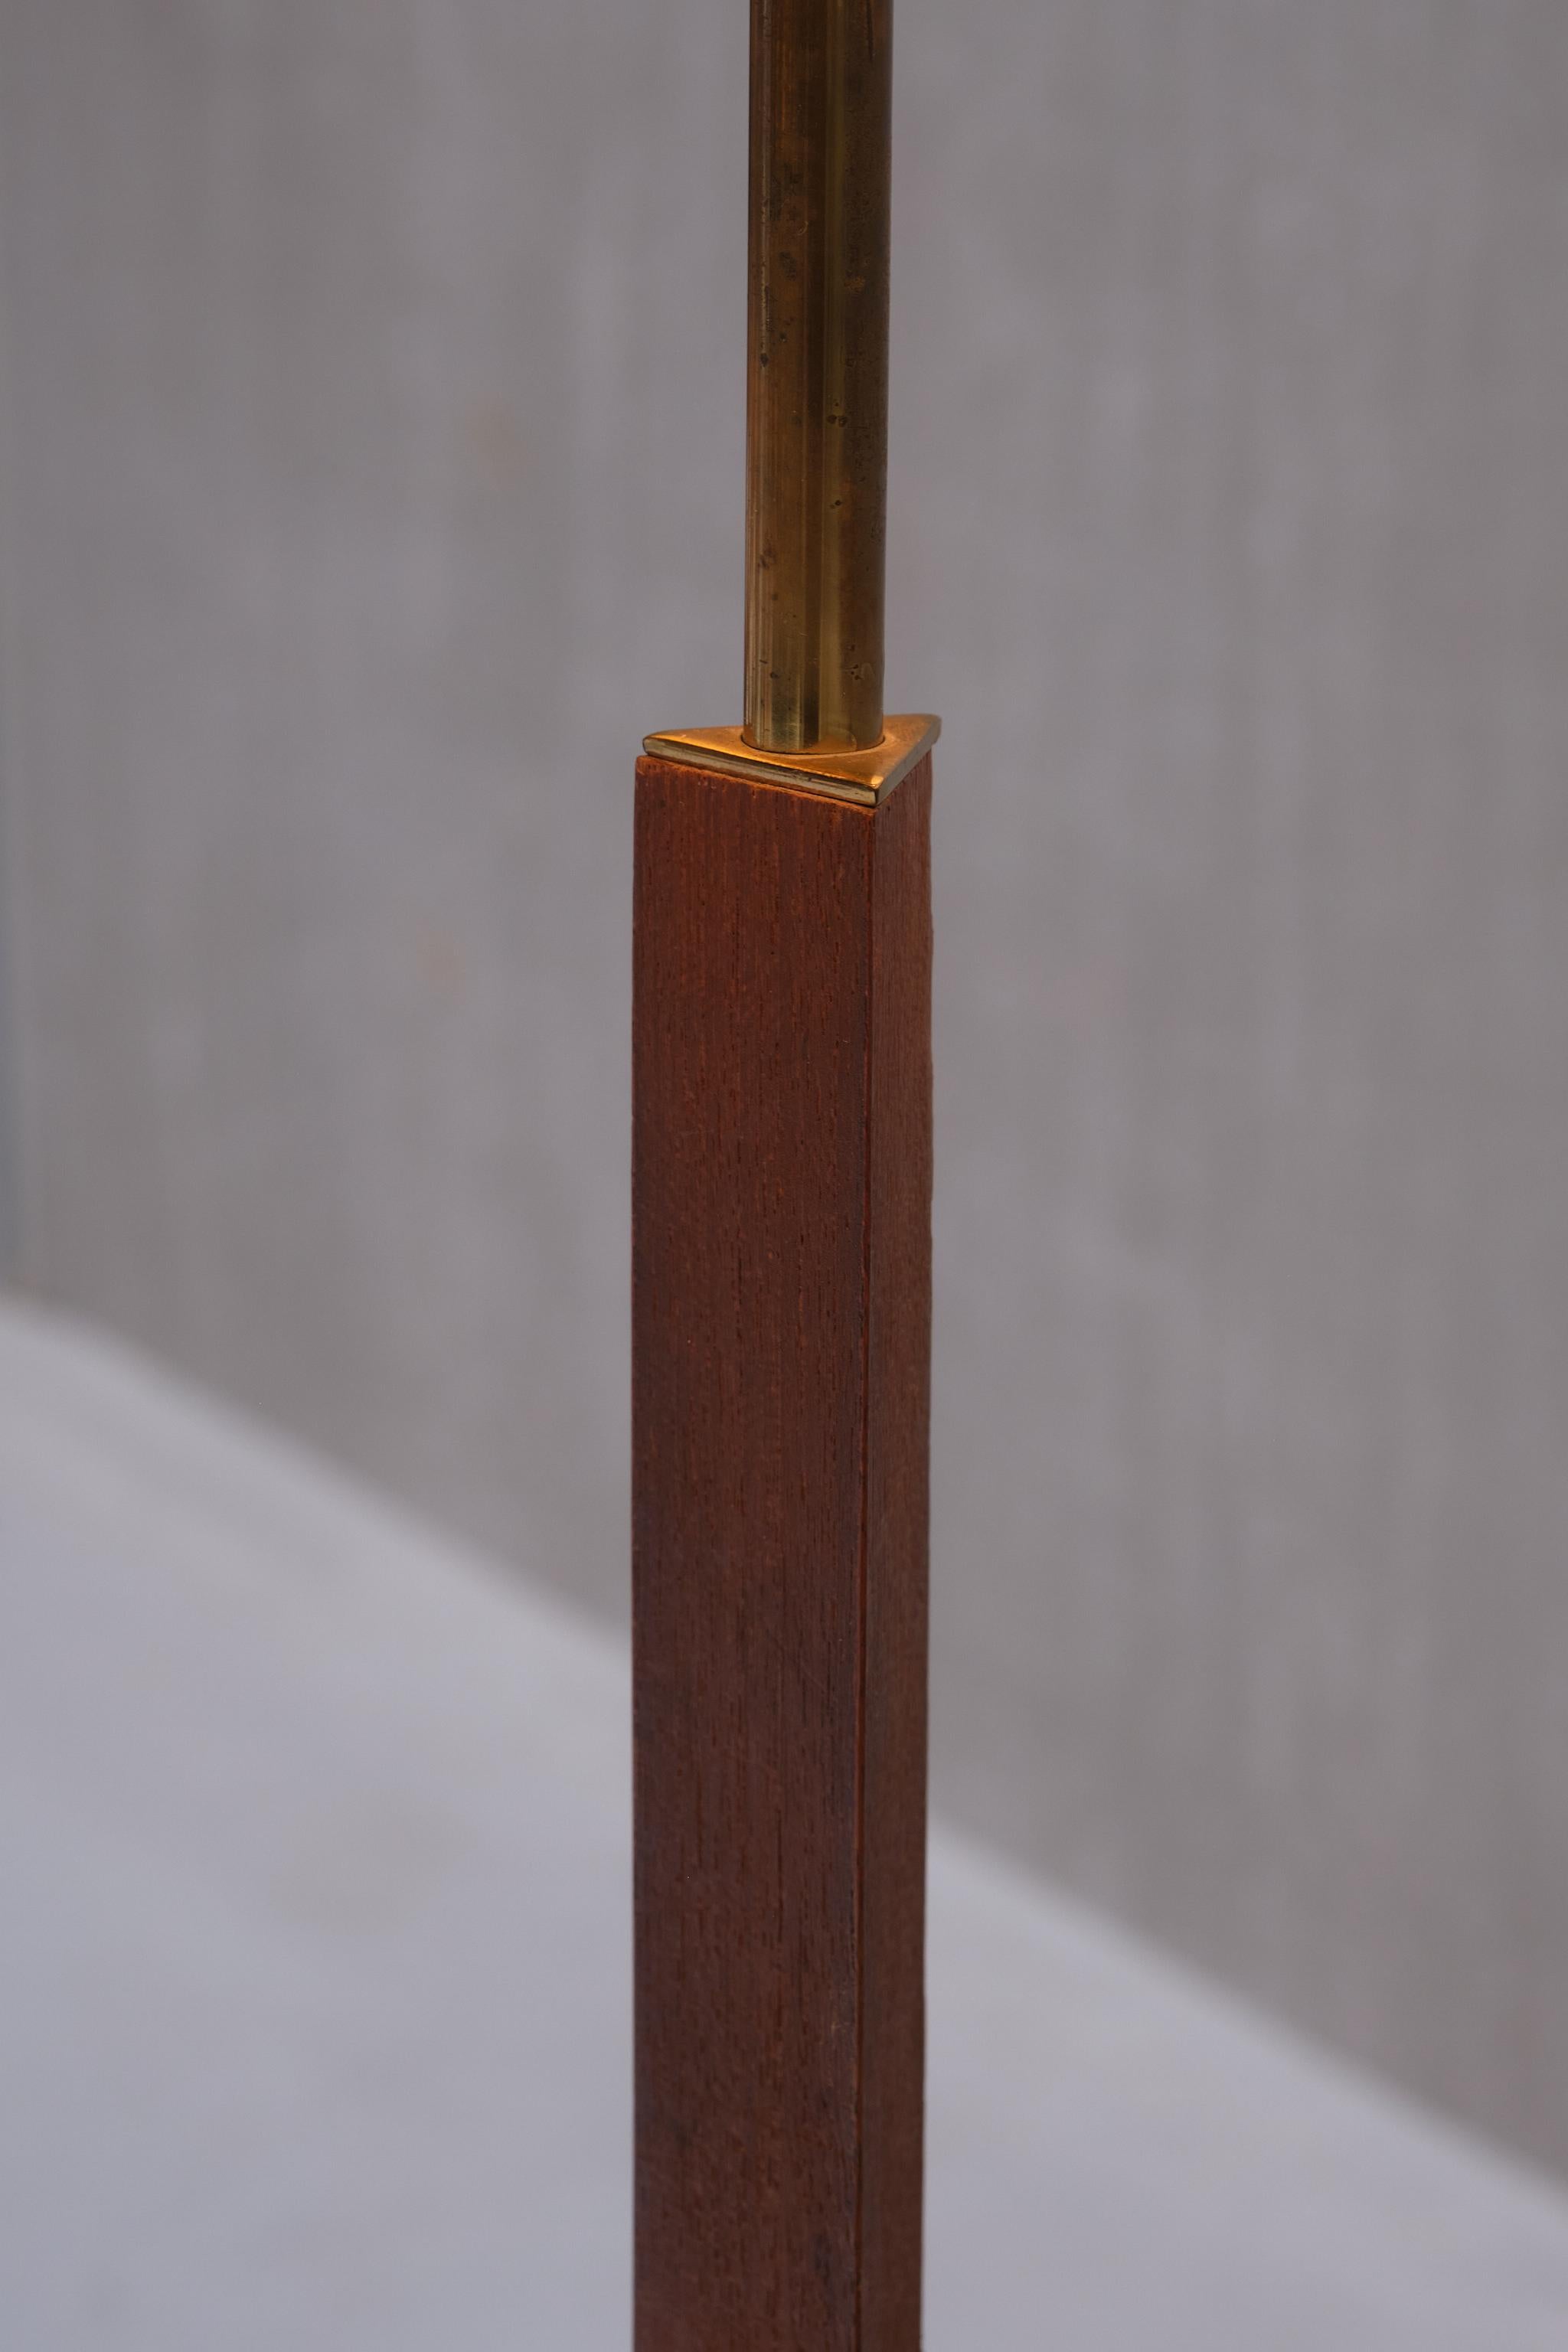 Danish Modern Three Legged Floor Lamp in Brass, Teak and Textured Shade, 1950s For Sale 1